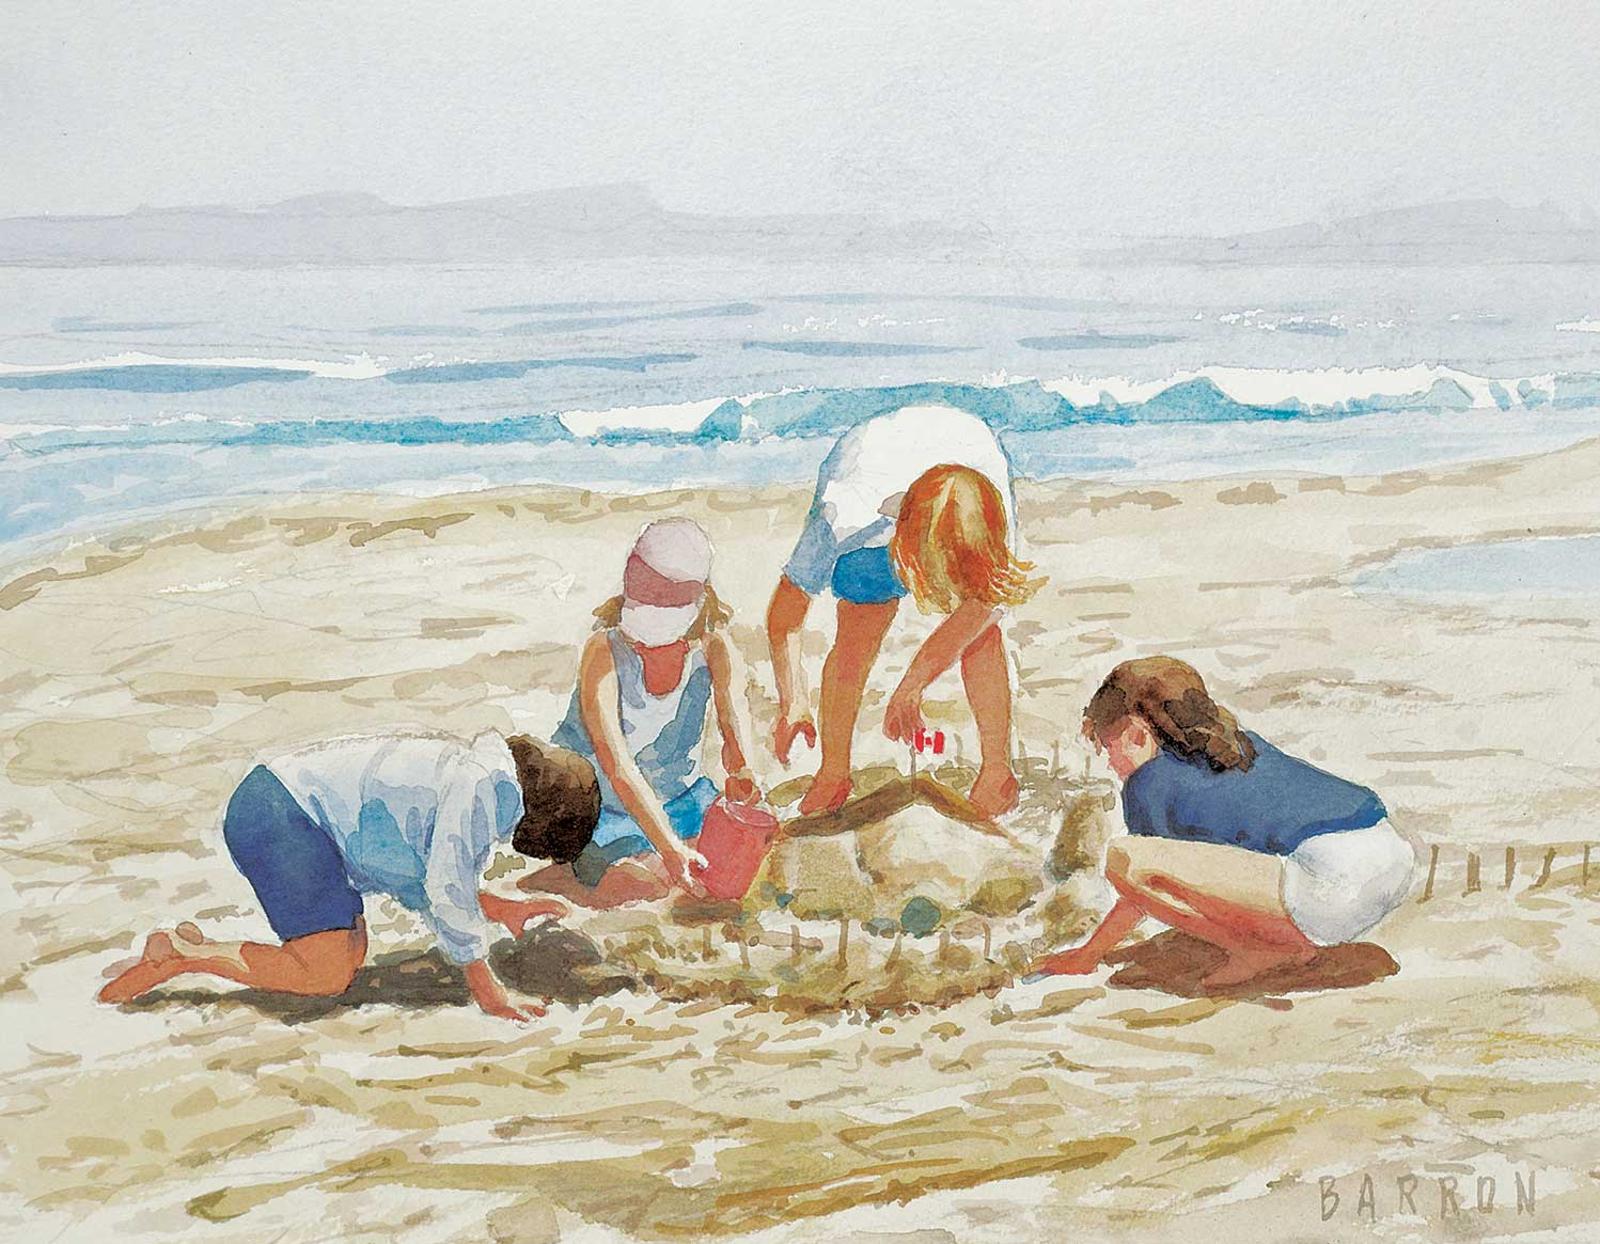 Barron - Untitled - On the Beach